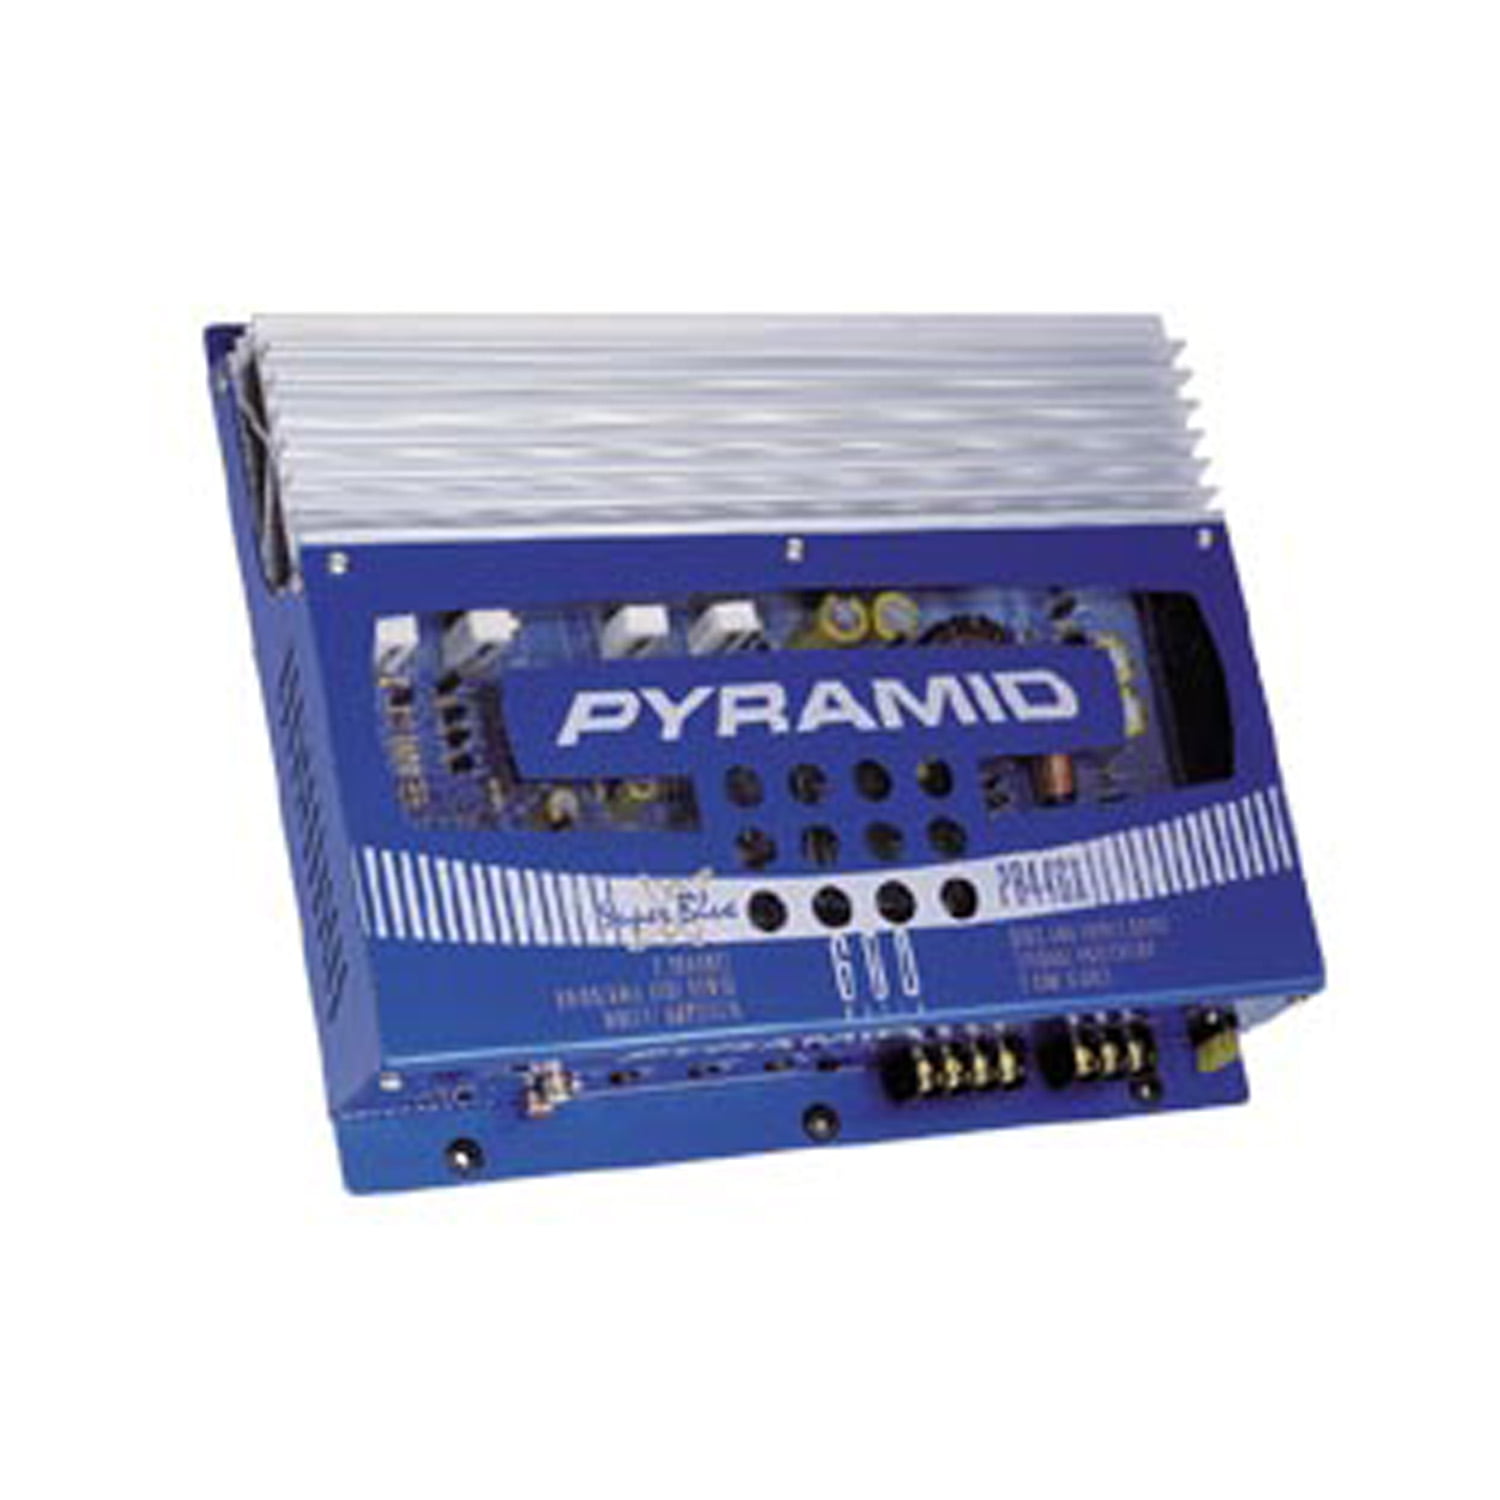 Pyramid 600 Watt 2 Channel MOSFET Amplifier - Walmart.com